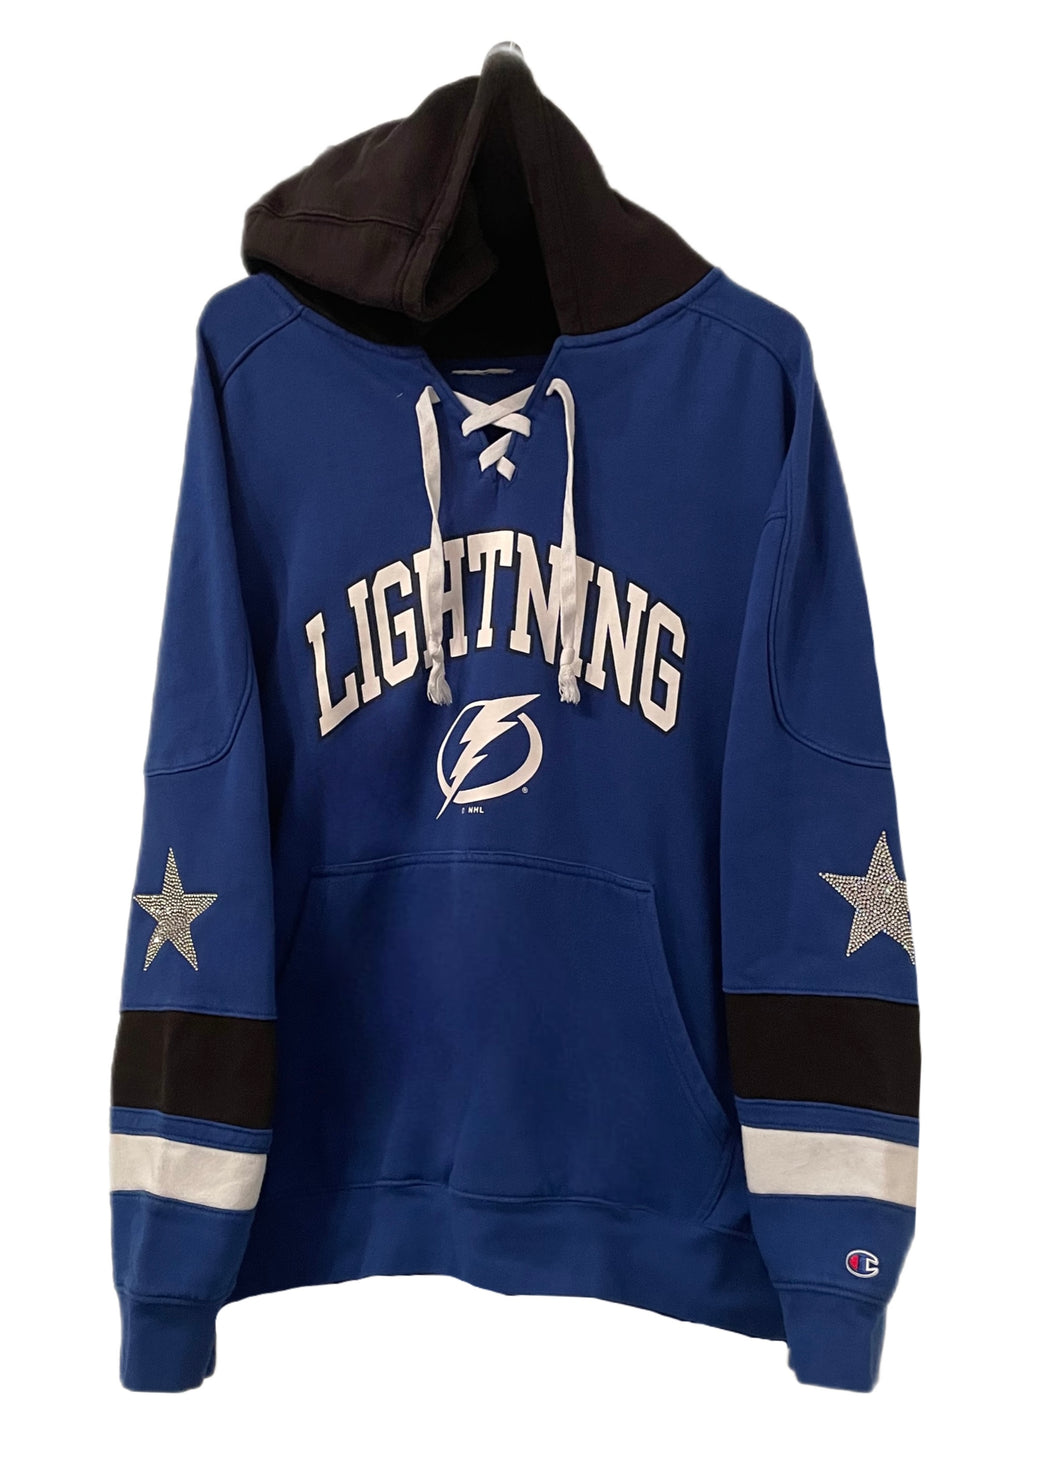 Tampa Bay Lightning, NHL One of a KIND Vintage Hoodie with Crystal Star Design